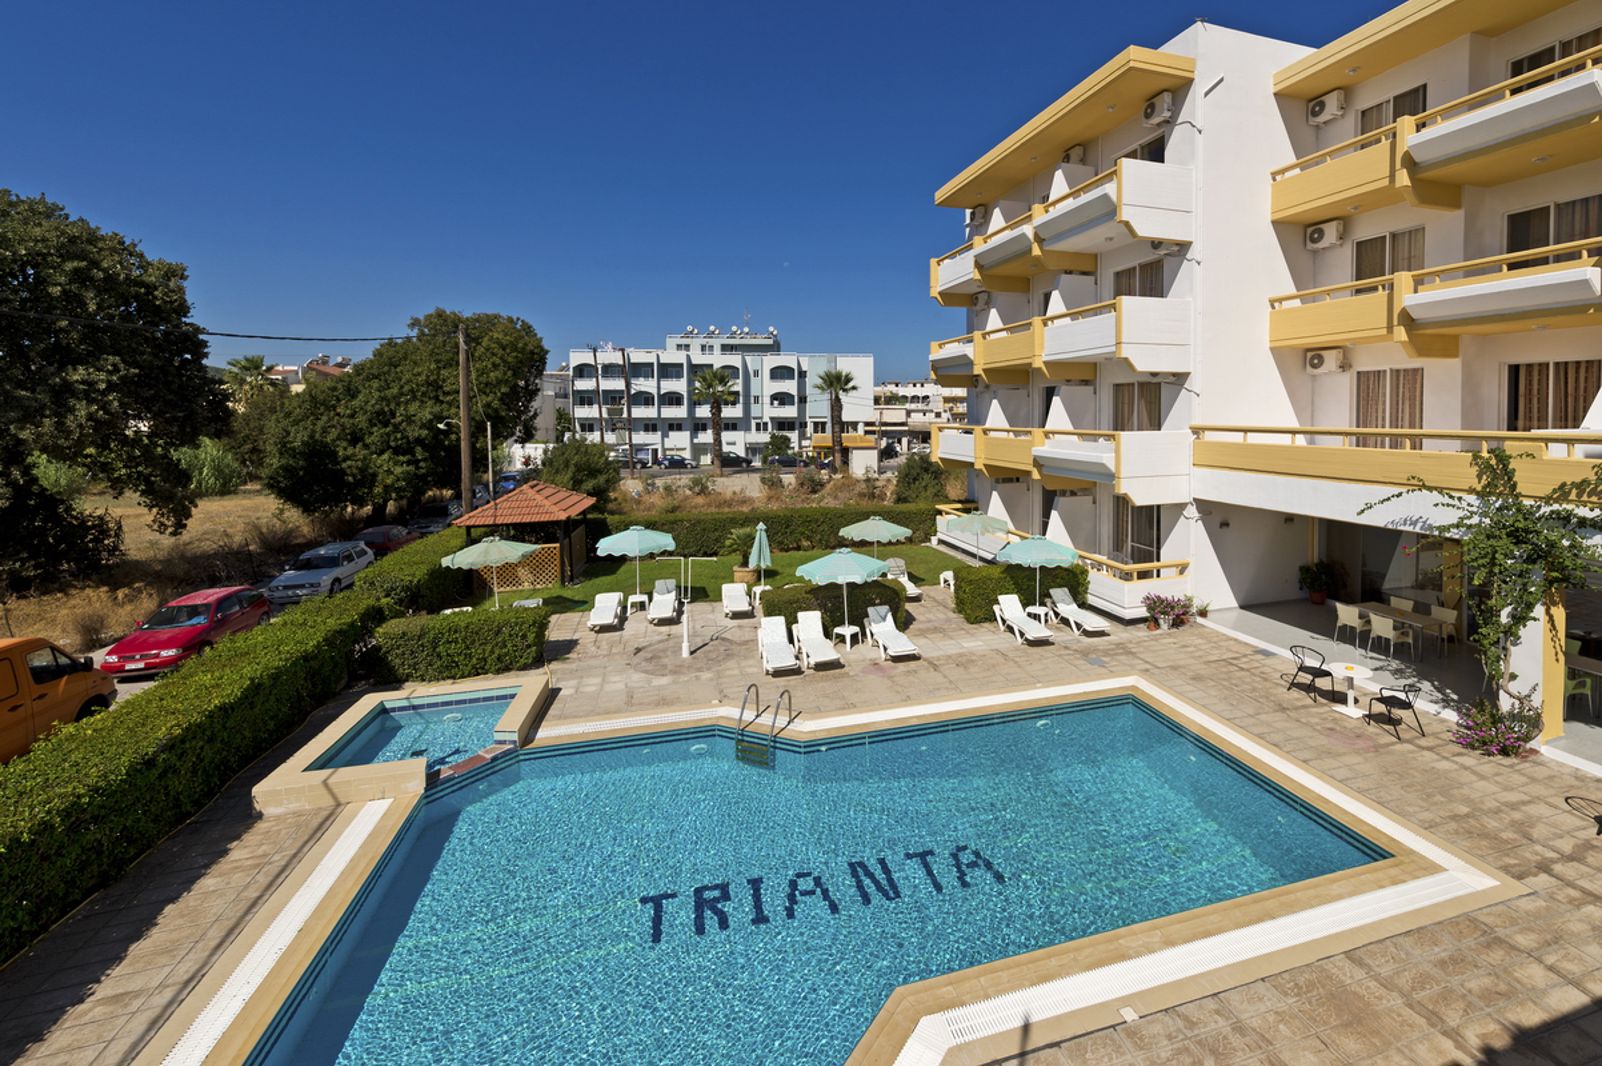 Griekenland - Trianta Hotel